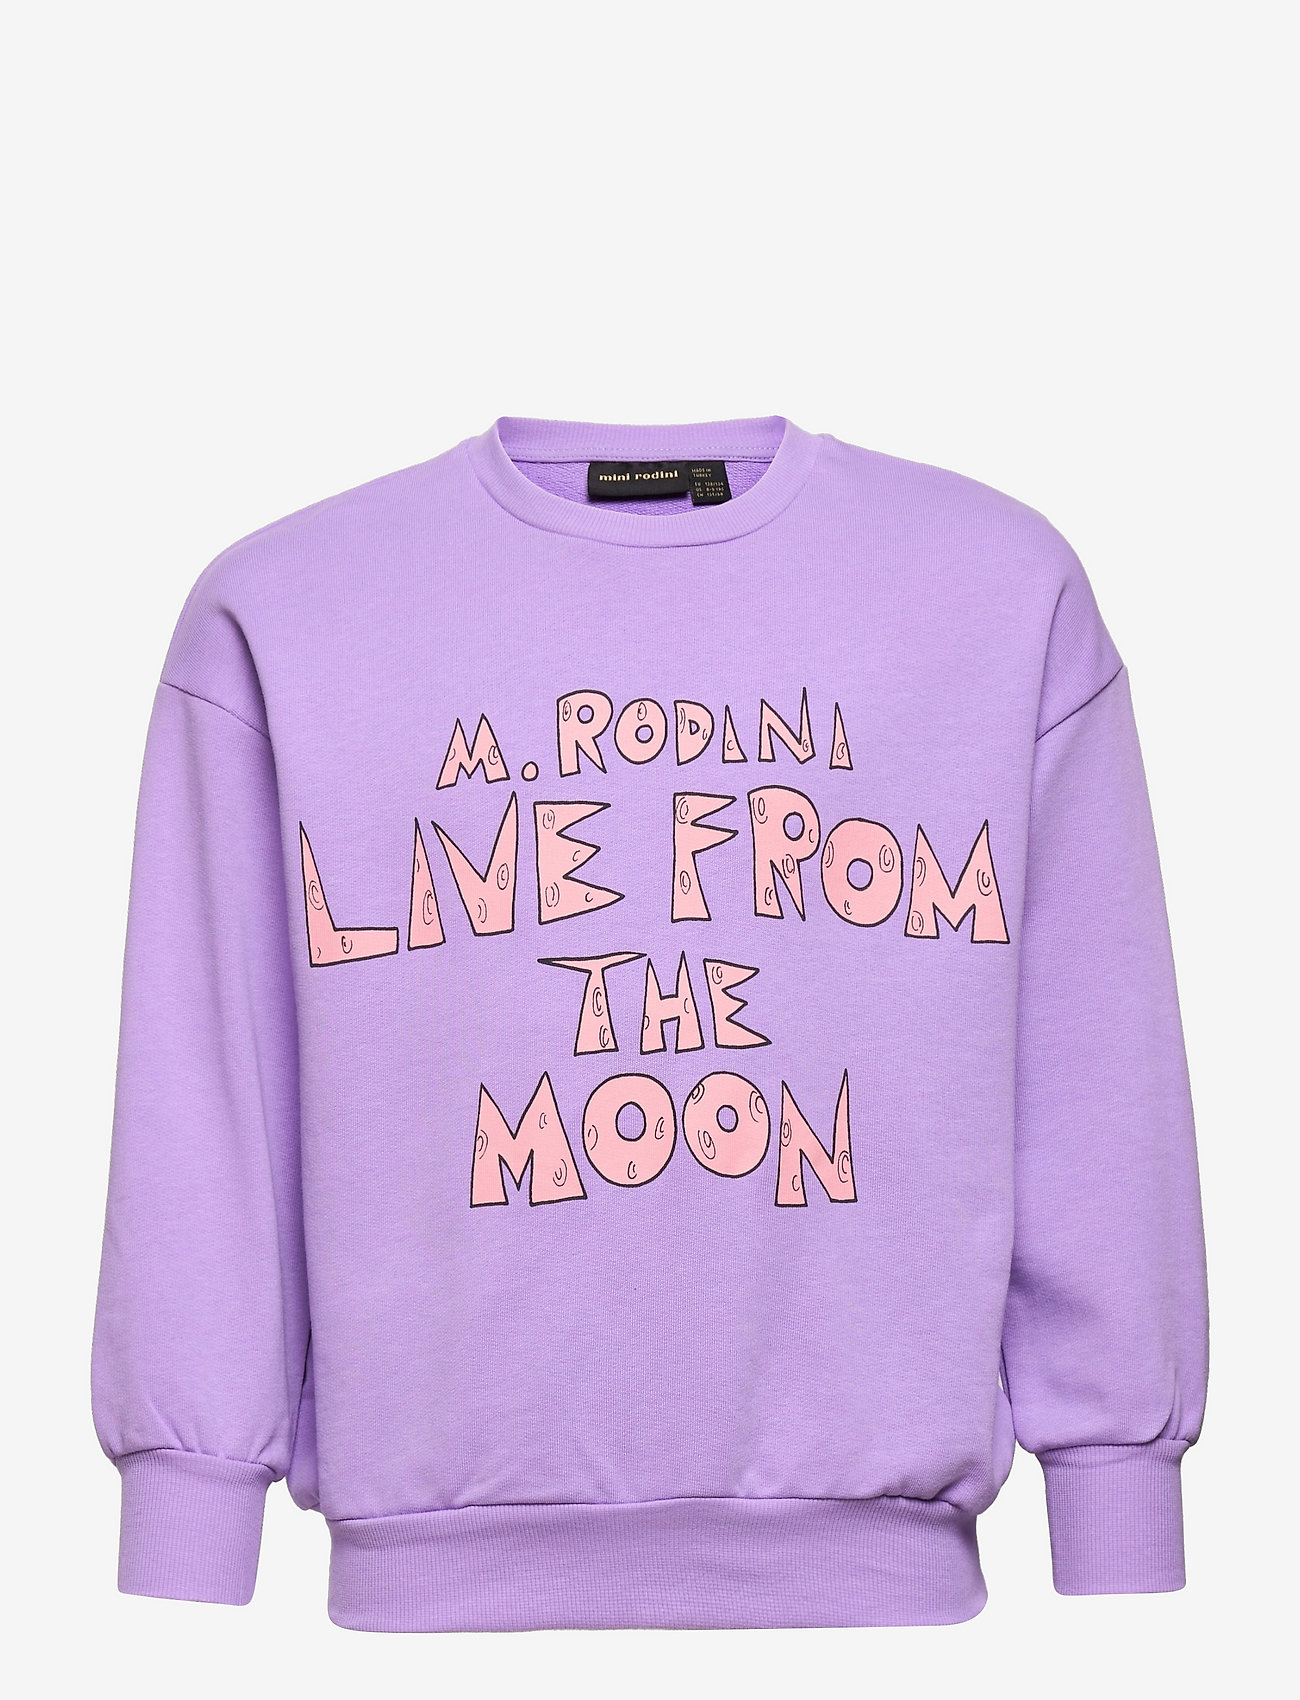 Mini Rodini - Live from the moon sweatshirt - sweat-shirt - purple - 0